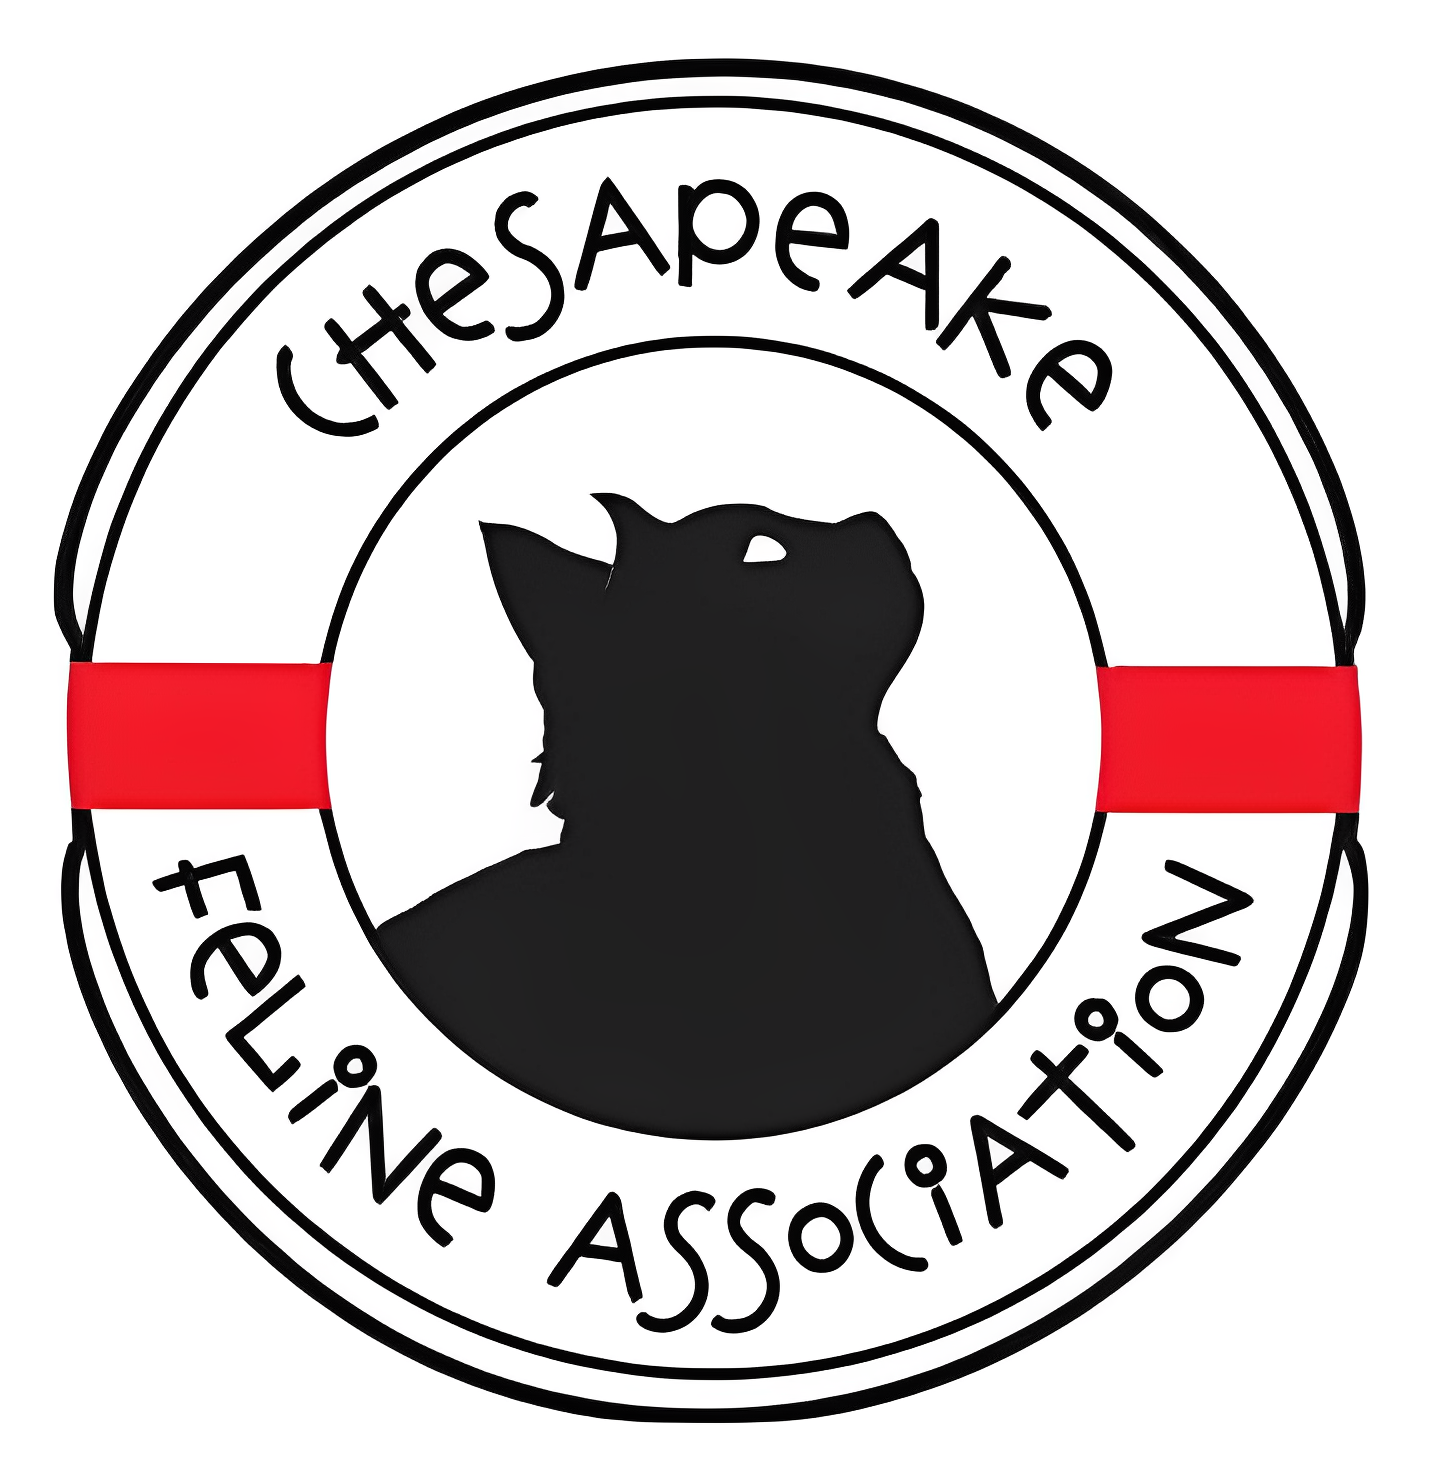 Chesapeake Feline Association logo